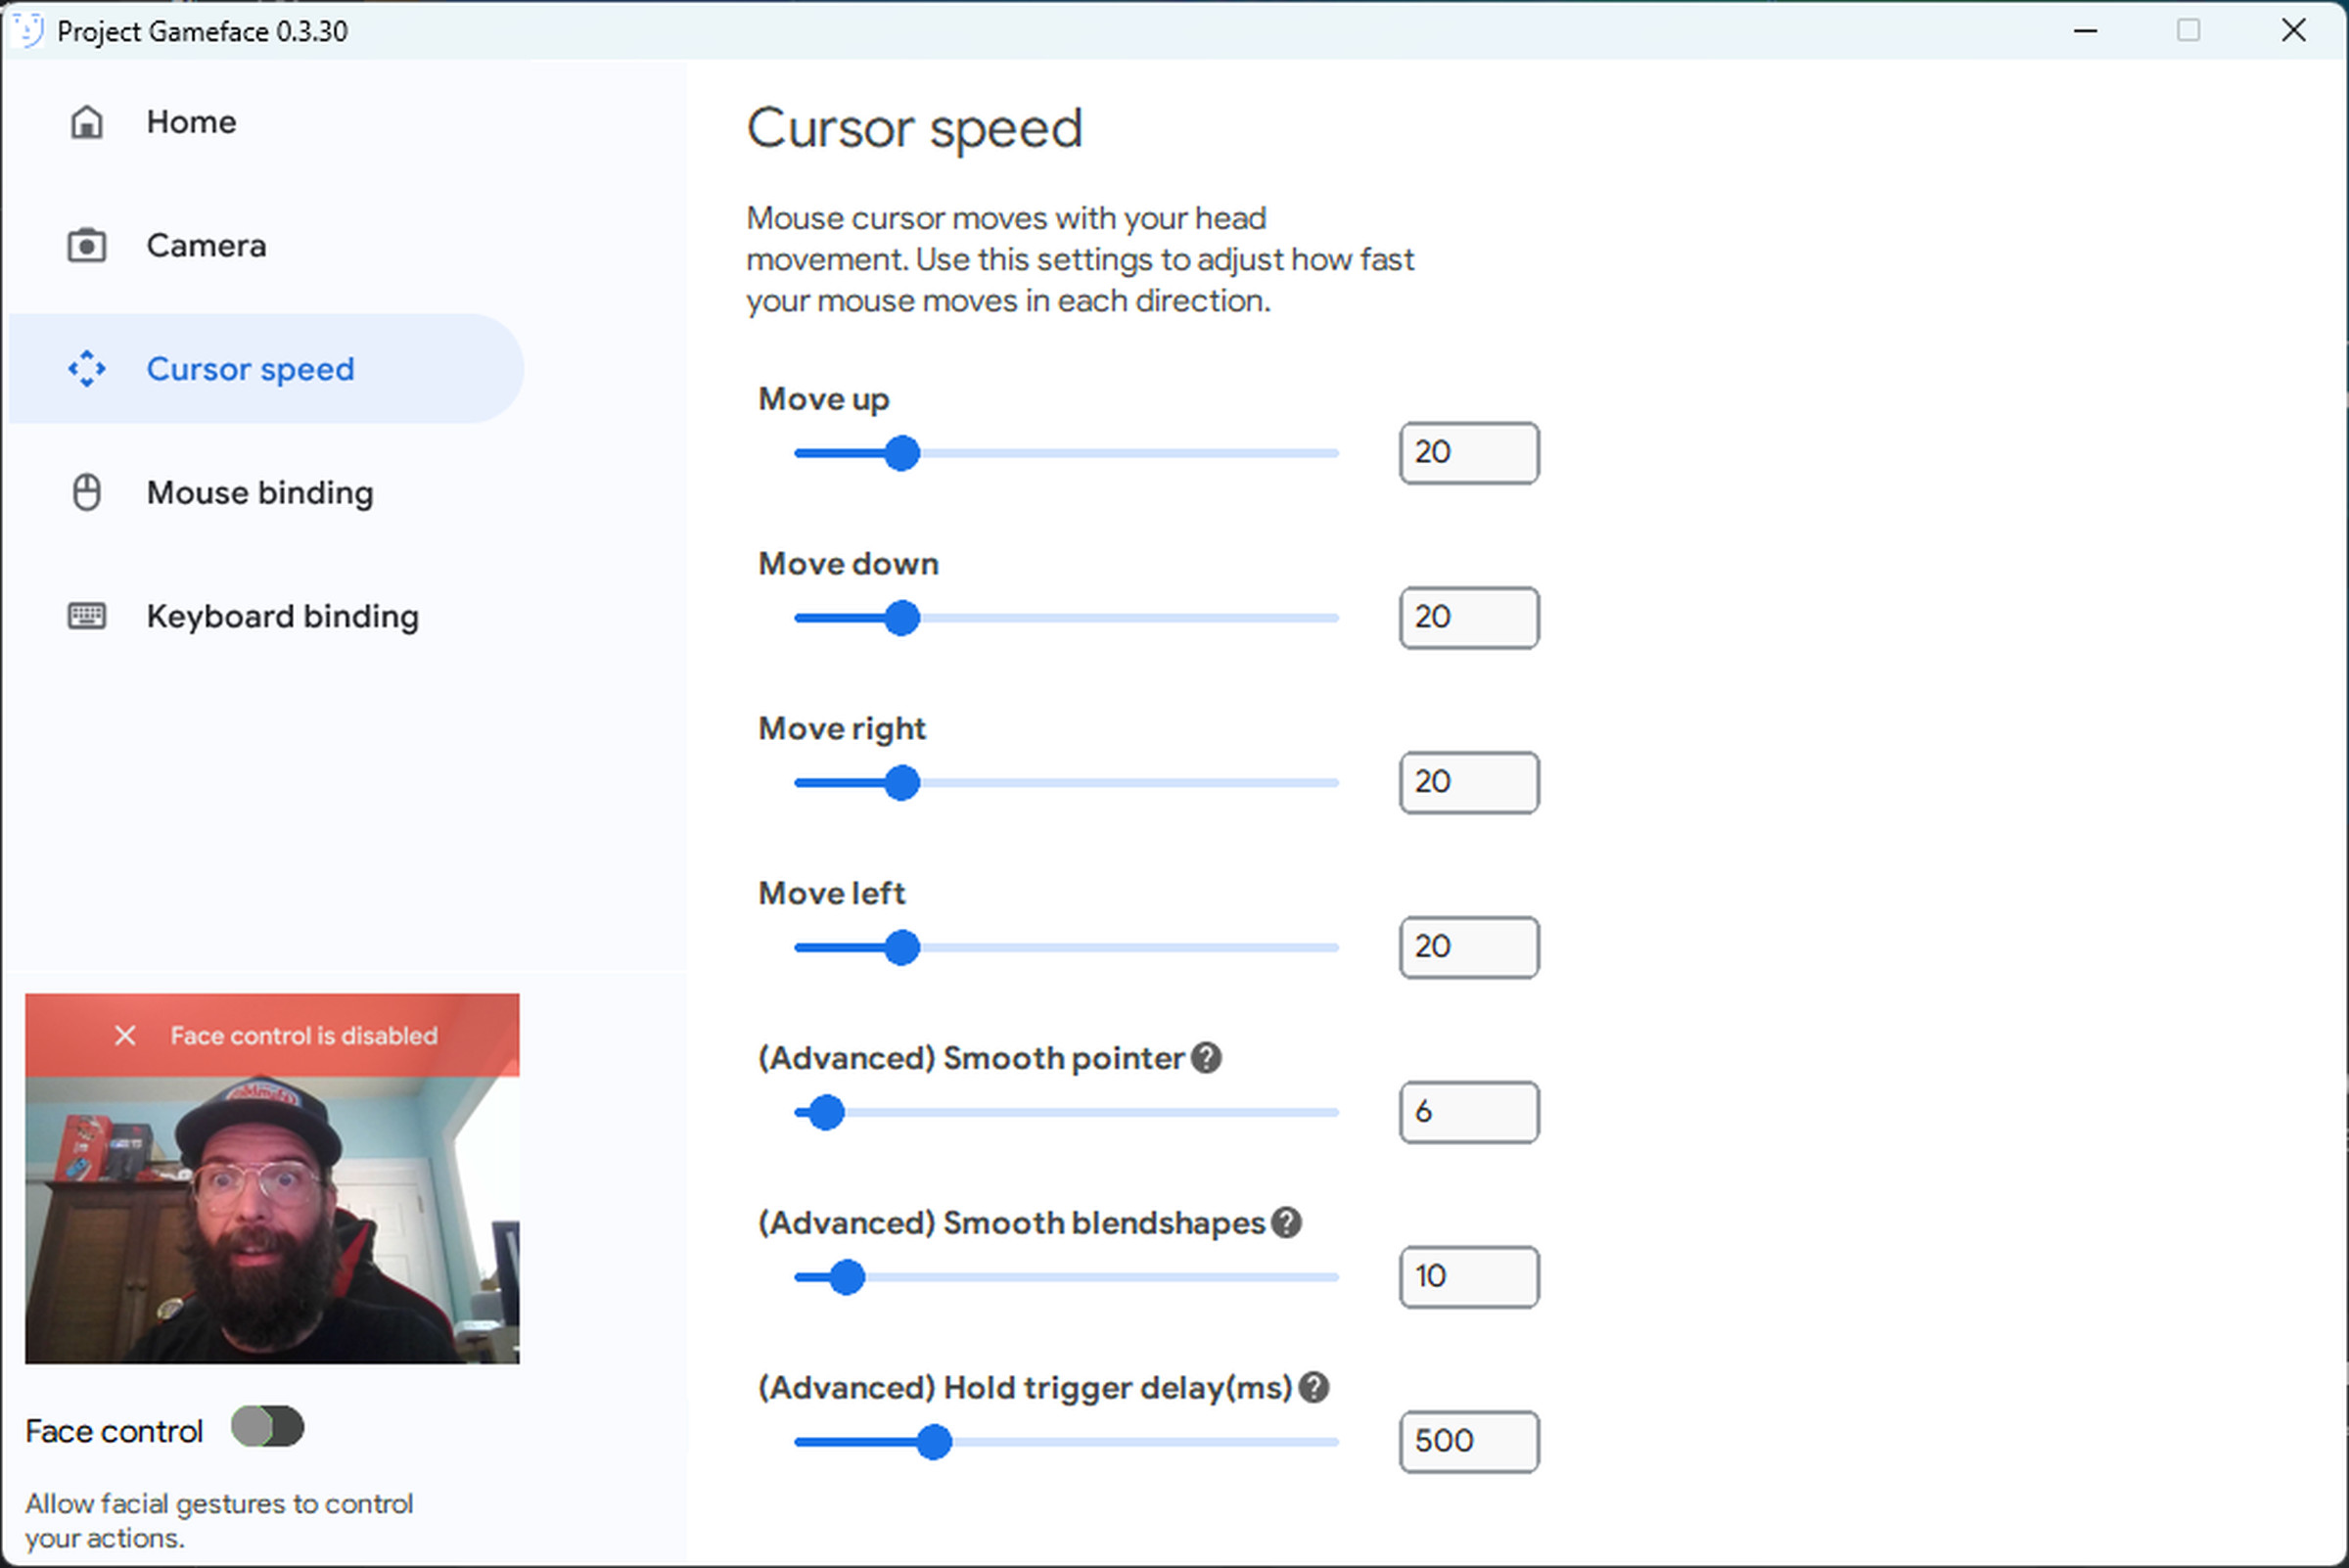 A screenshot of the cursor speed screen